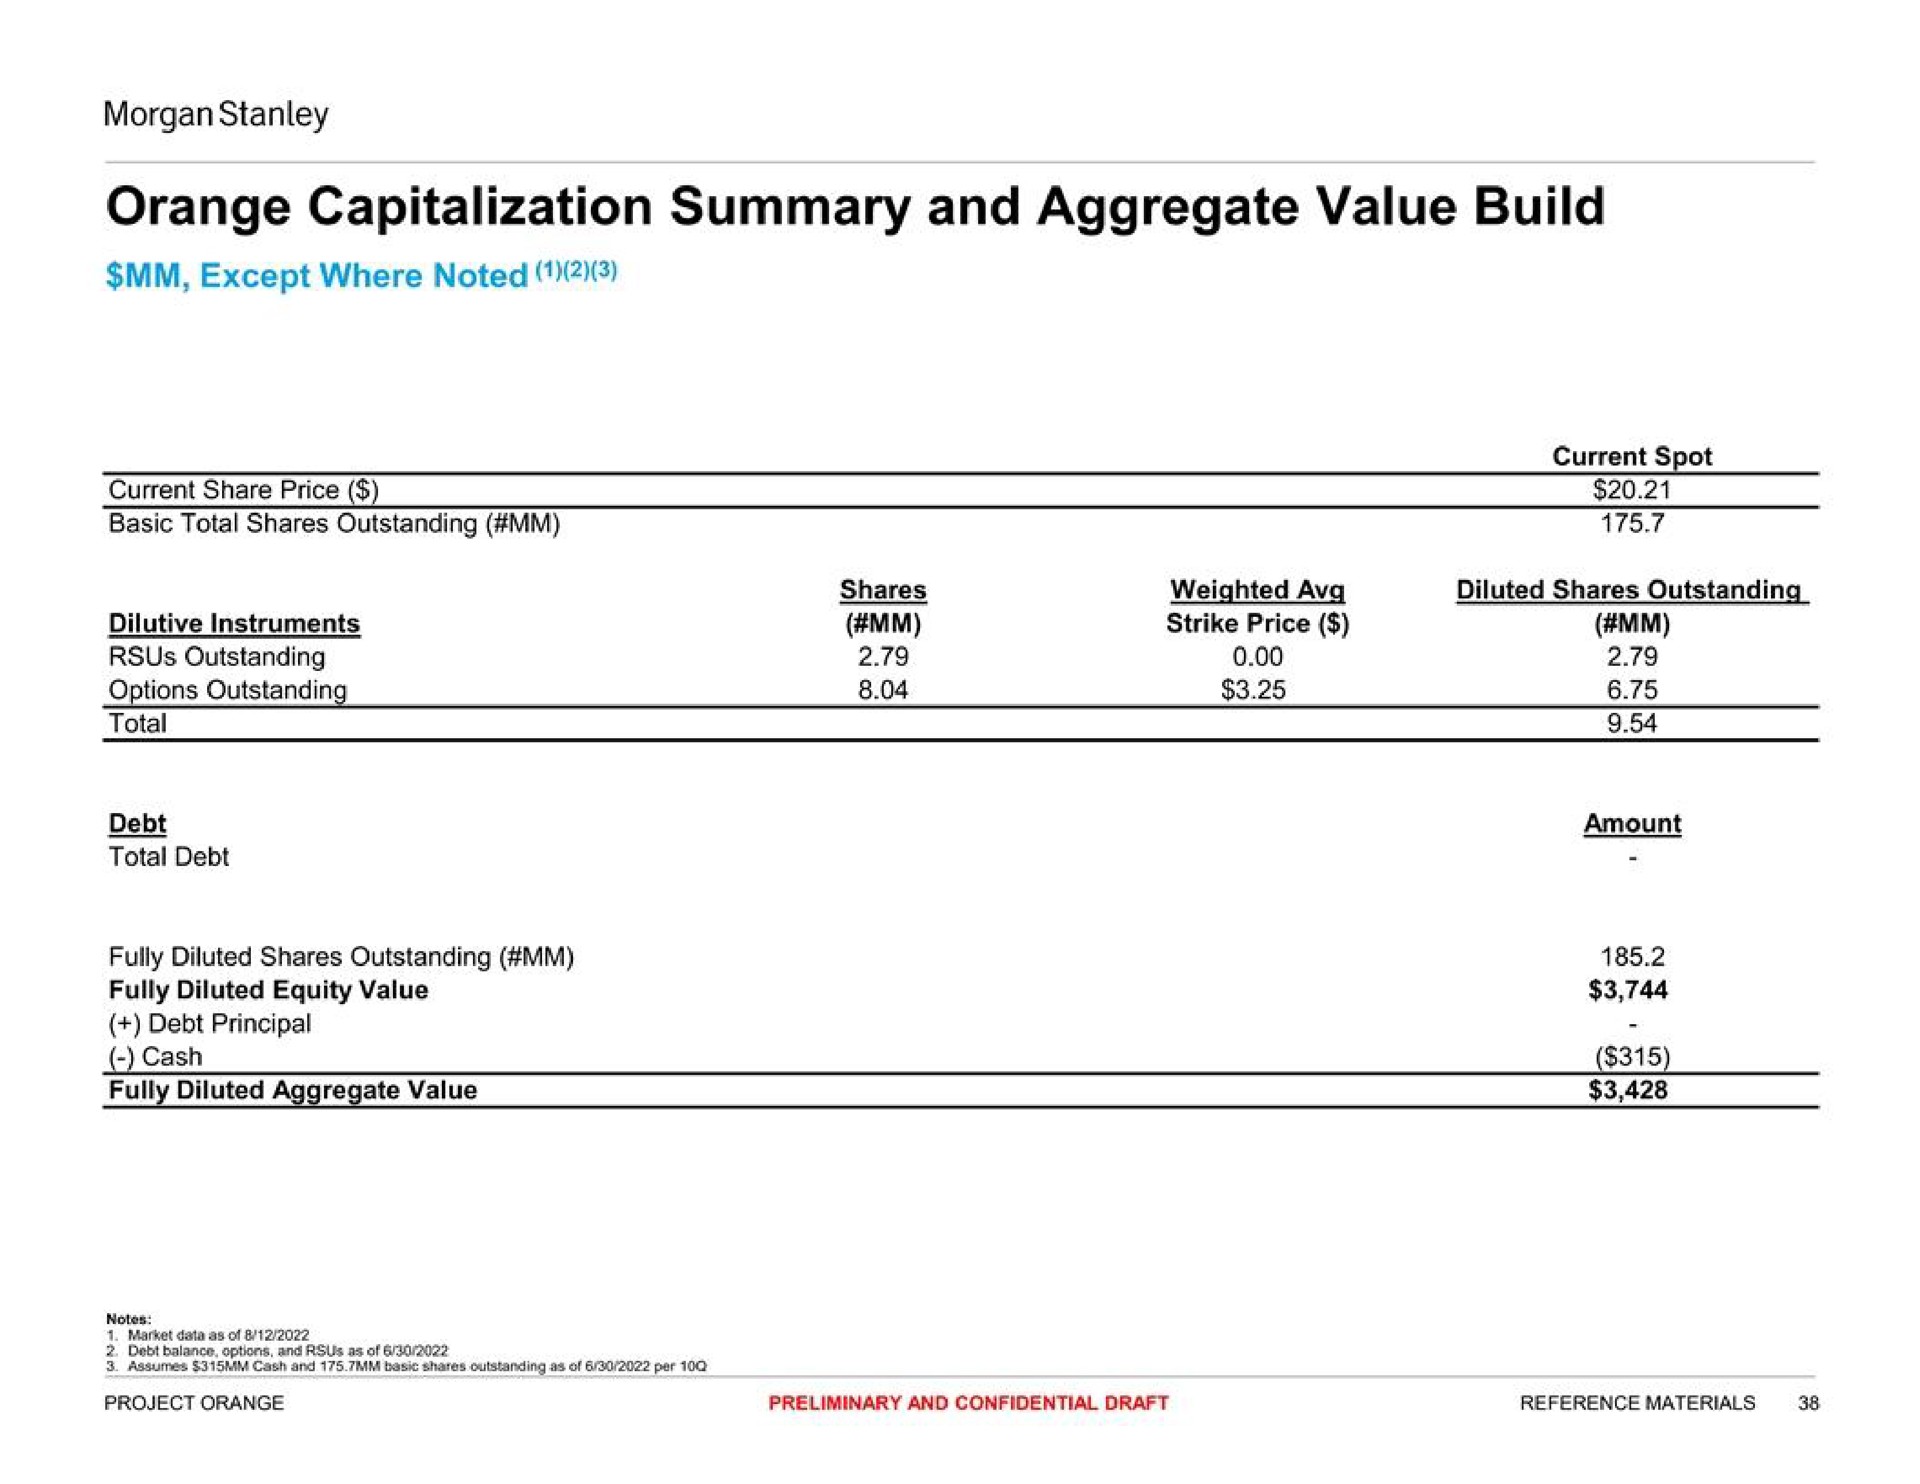 orange capitalization summary and aggregate value build | Morgan Stanley